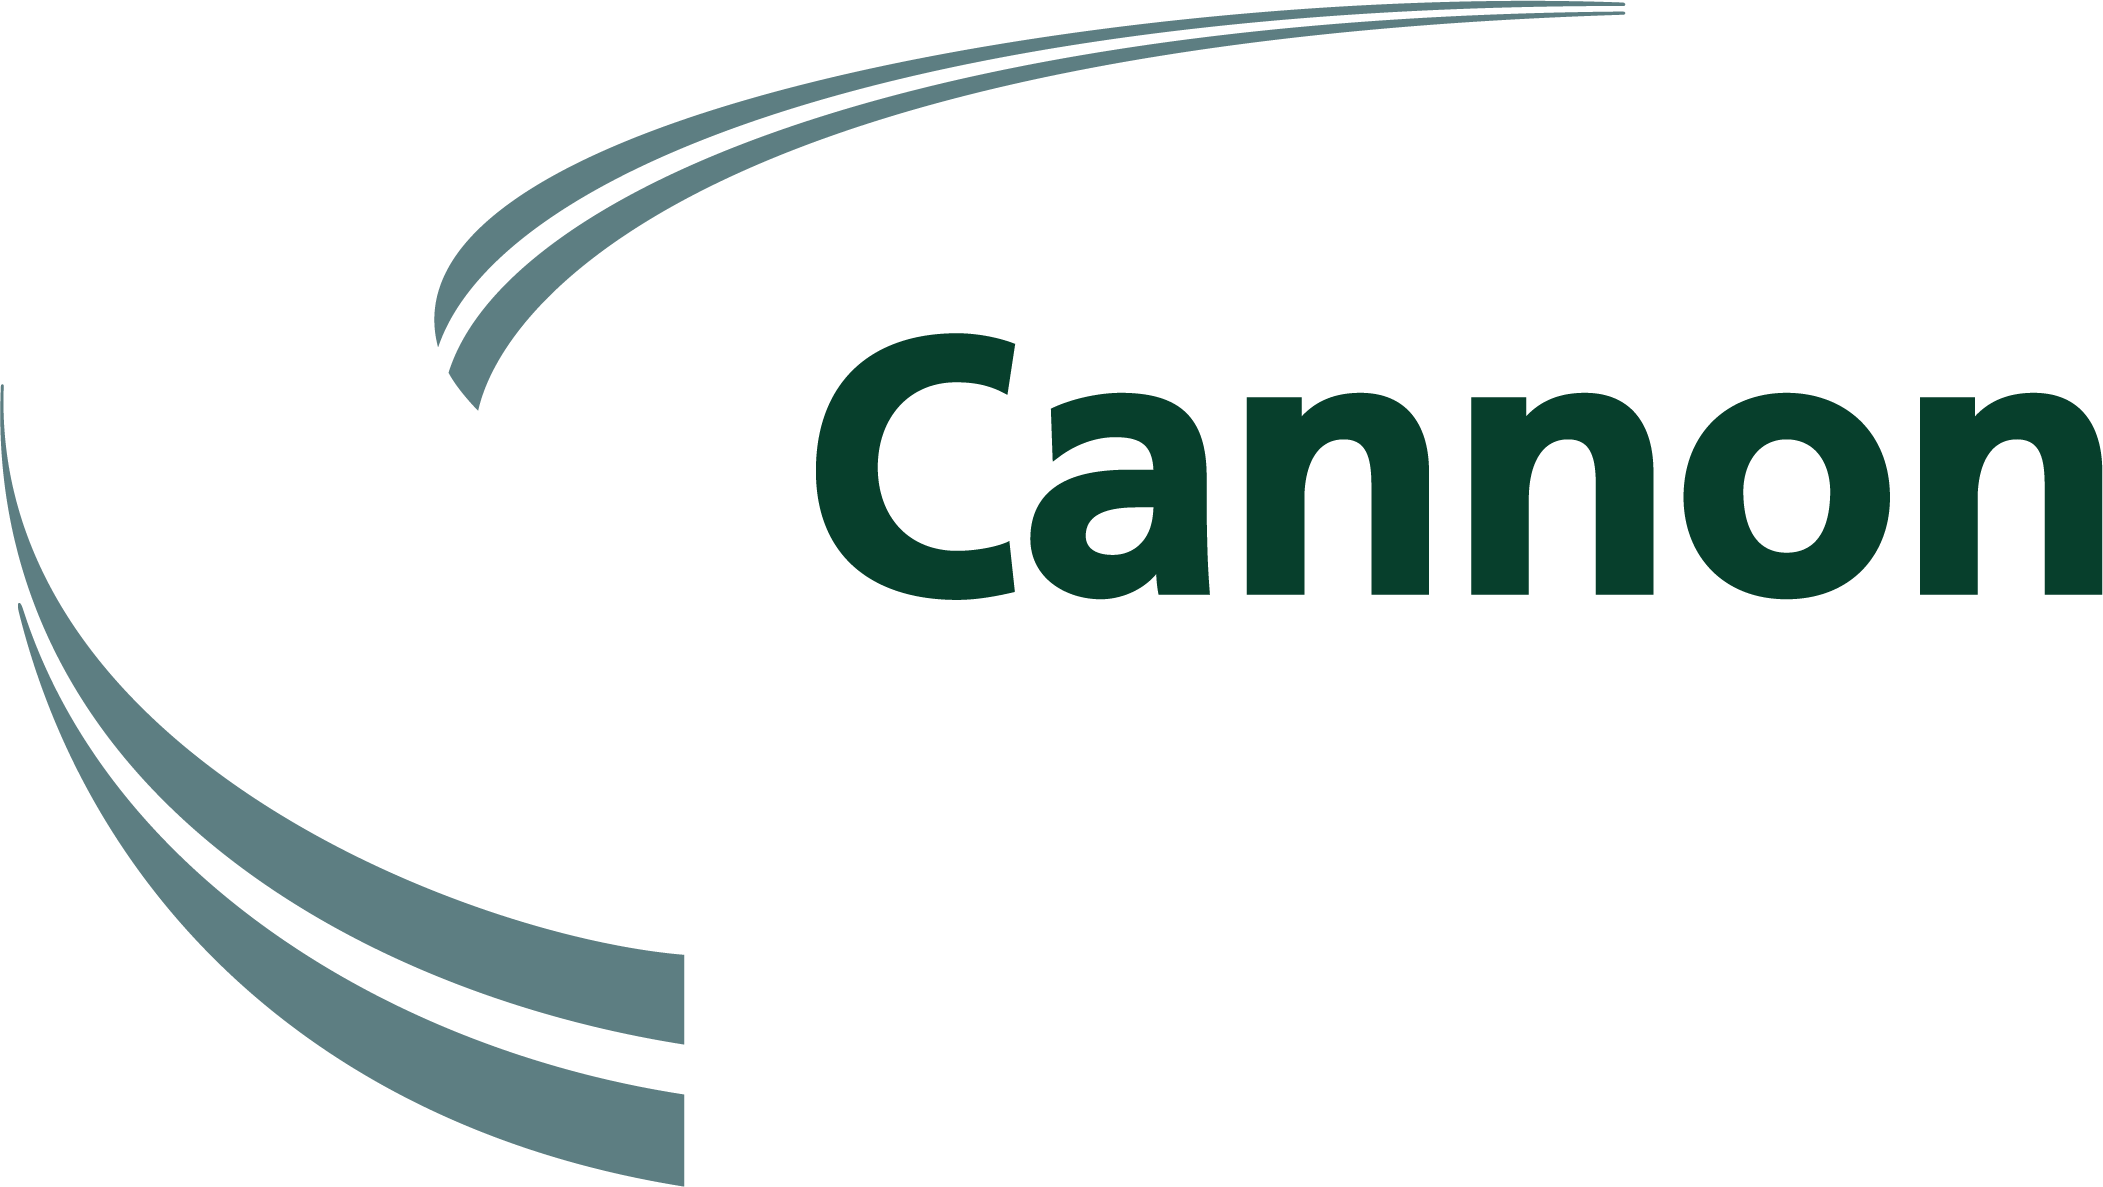 Cannon Corporation Logo (Copy) (Copy)